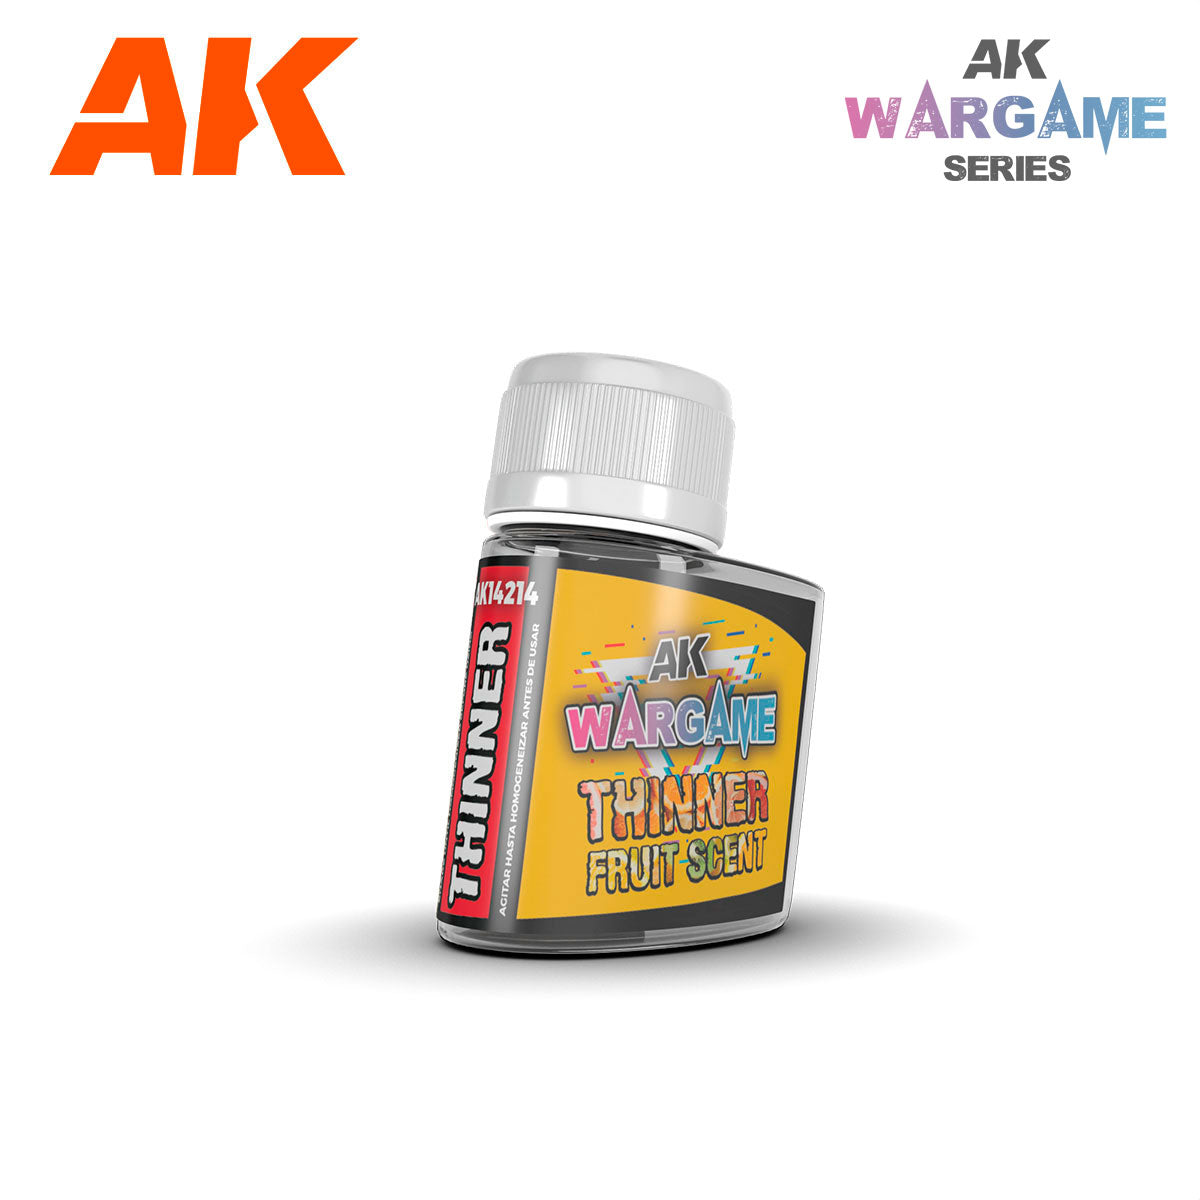 AK14214 - Thinner fruit scent - 35ml